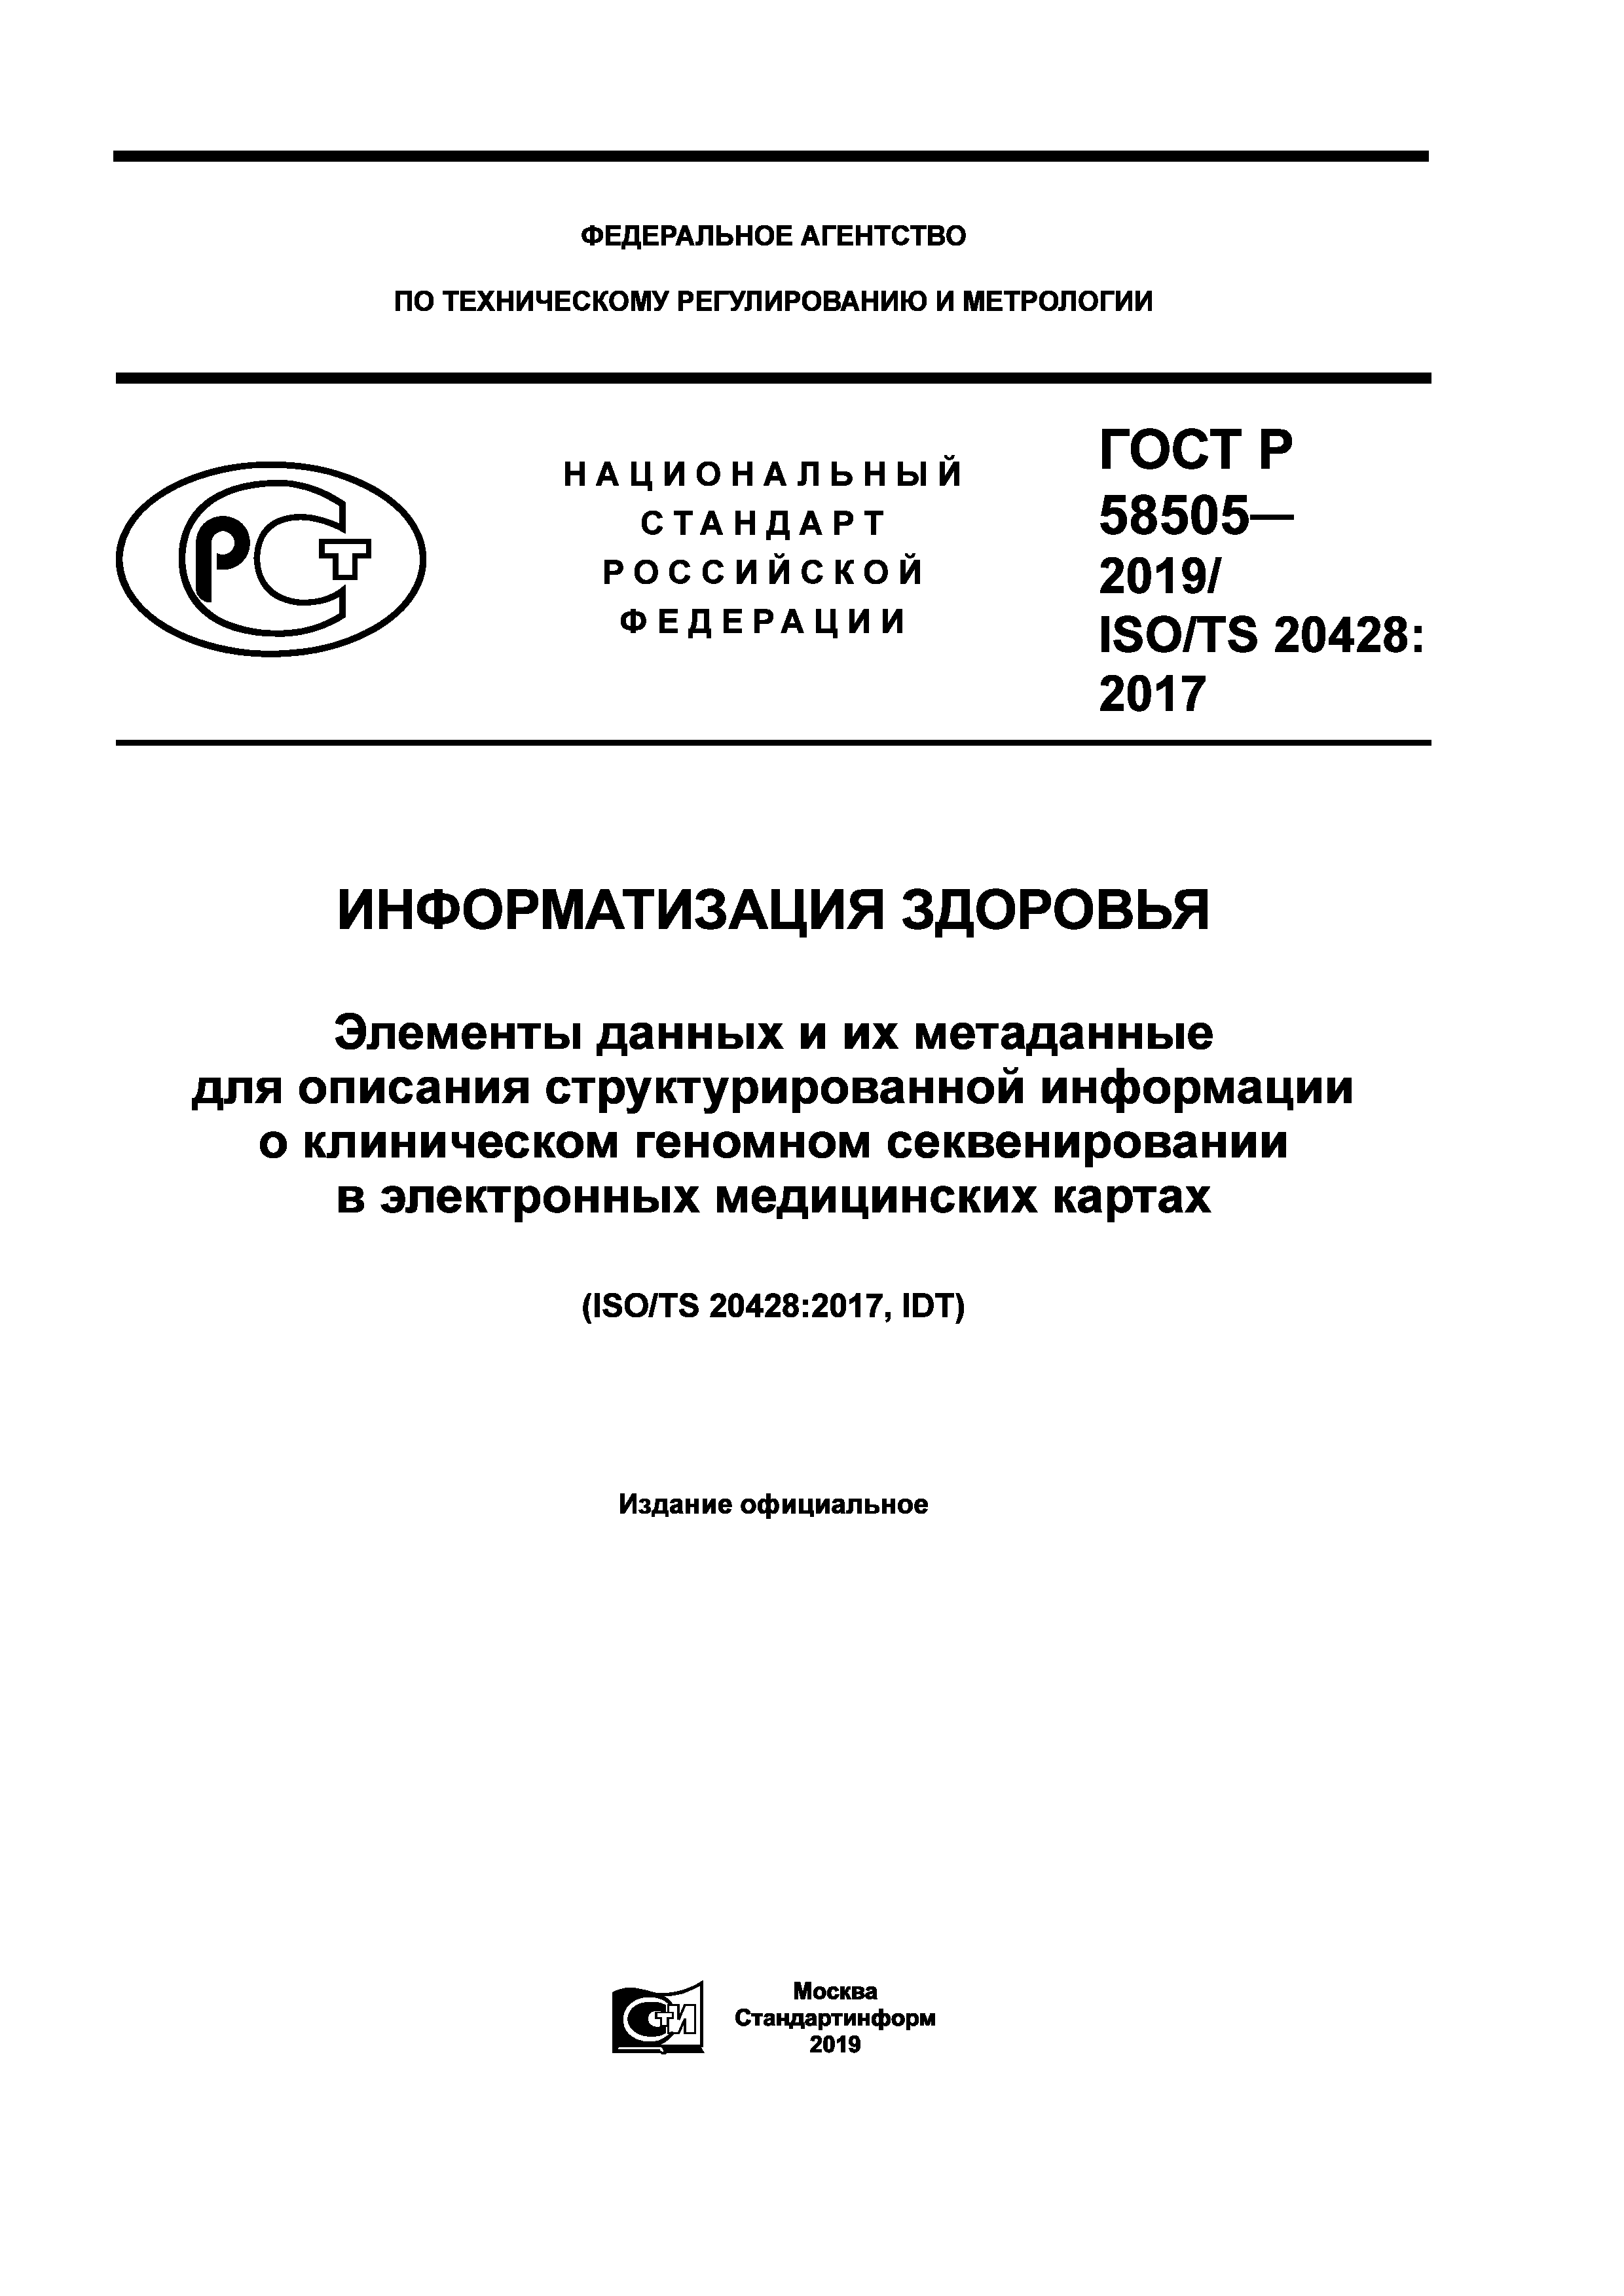 ГОСТ Р 58505-2019